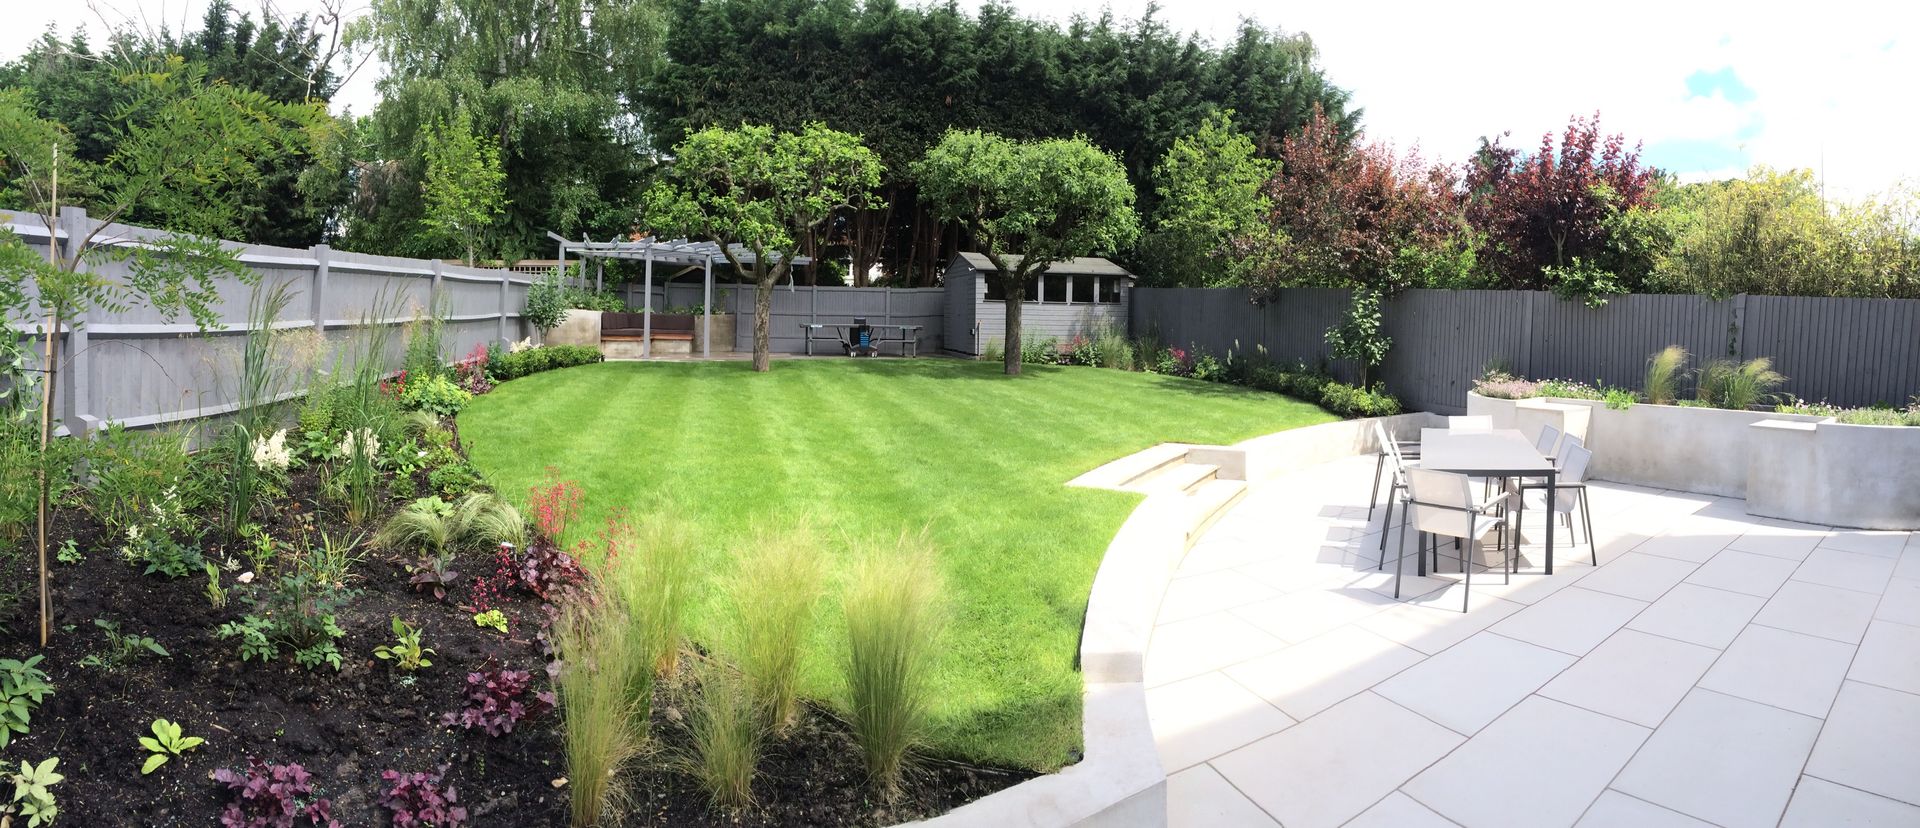 Modern Family Garden Borrowed Space Garden lawn,modern,contempoary,pergola,raised border,wall,concrete,paving,render